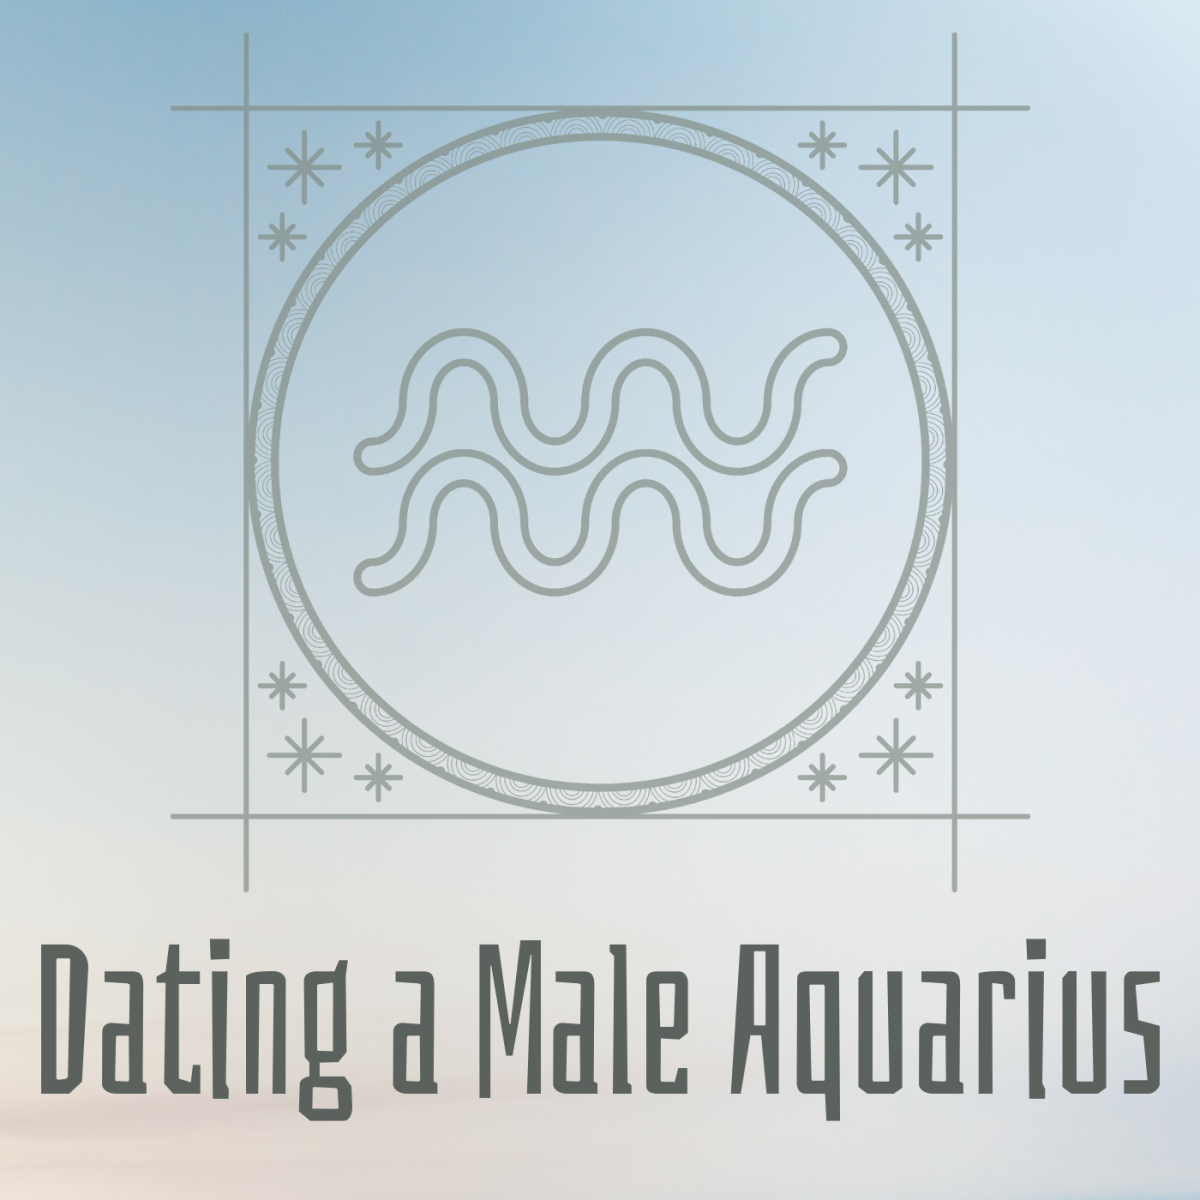 Tips for Dating an Aquarius Man